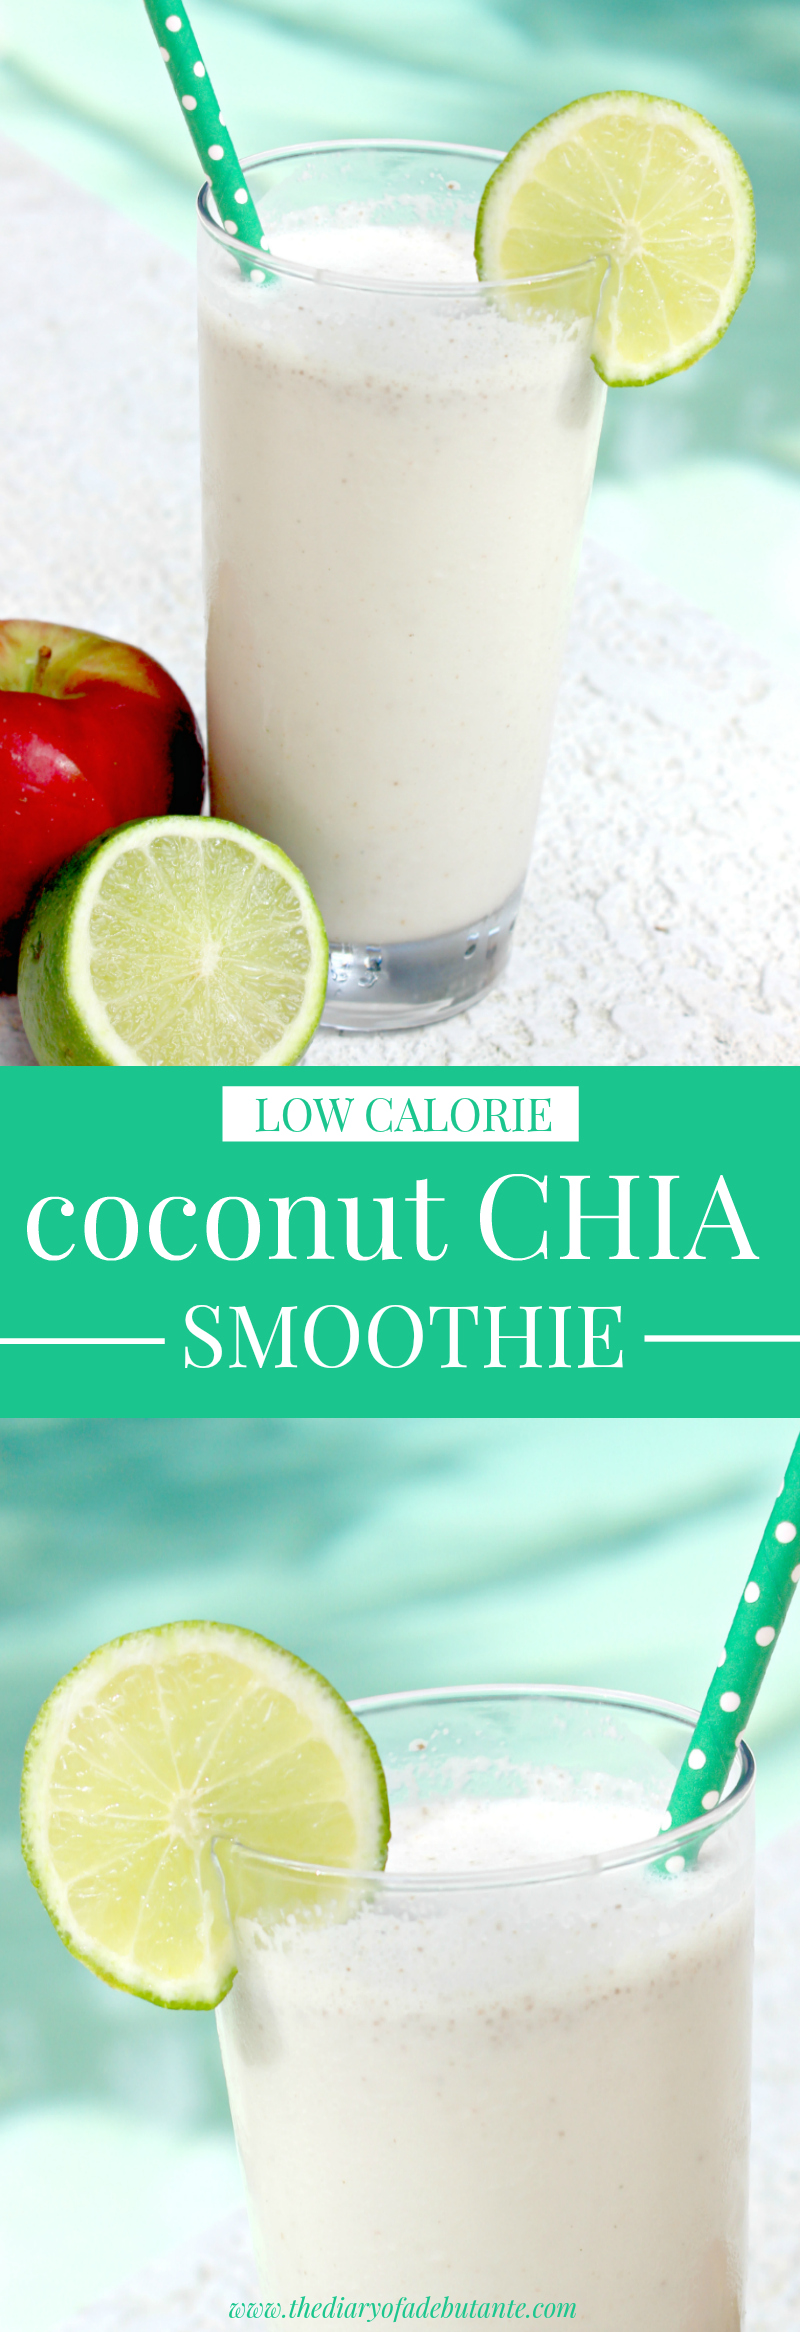 Low calorie coconut chia smoothie recipe